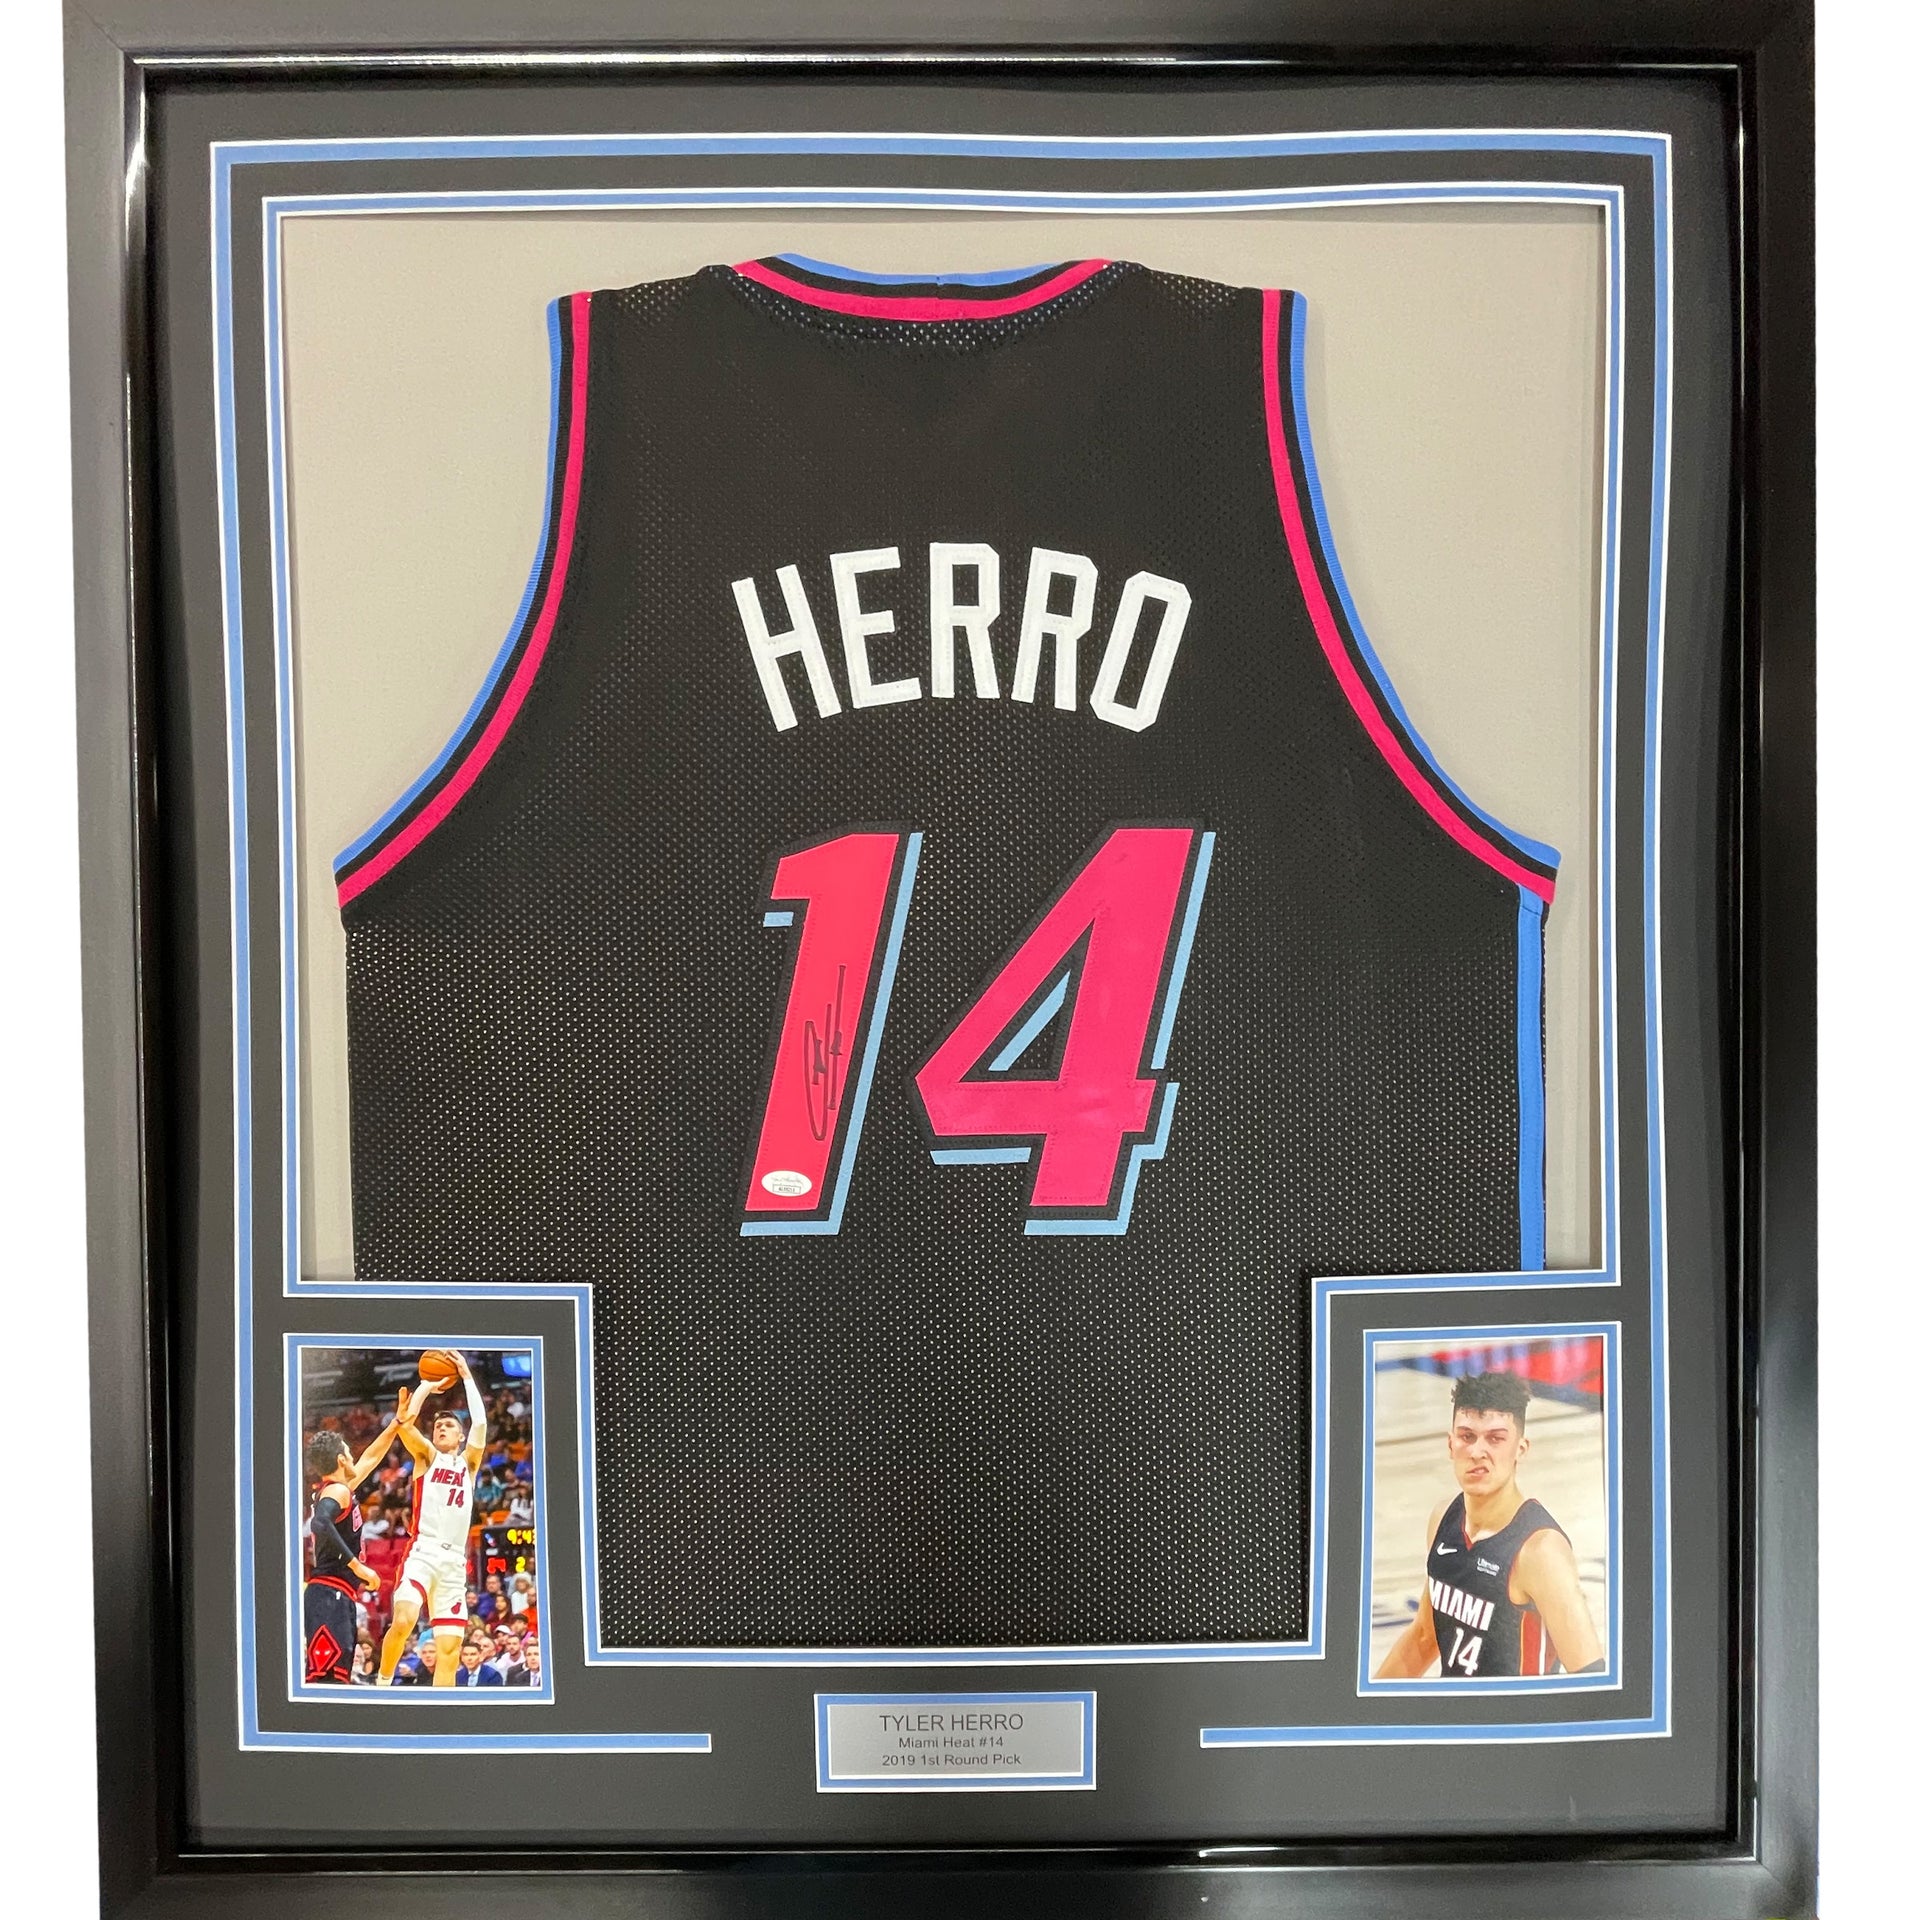 Tyler HERRO Miami Heat SIGNED FRAMED City Edition Basketball